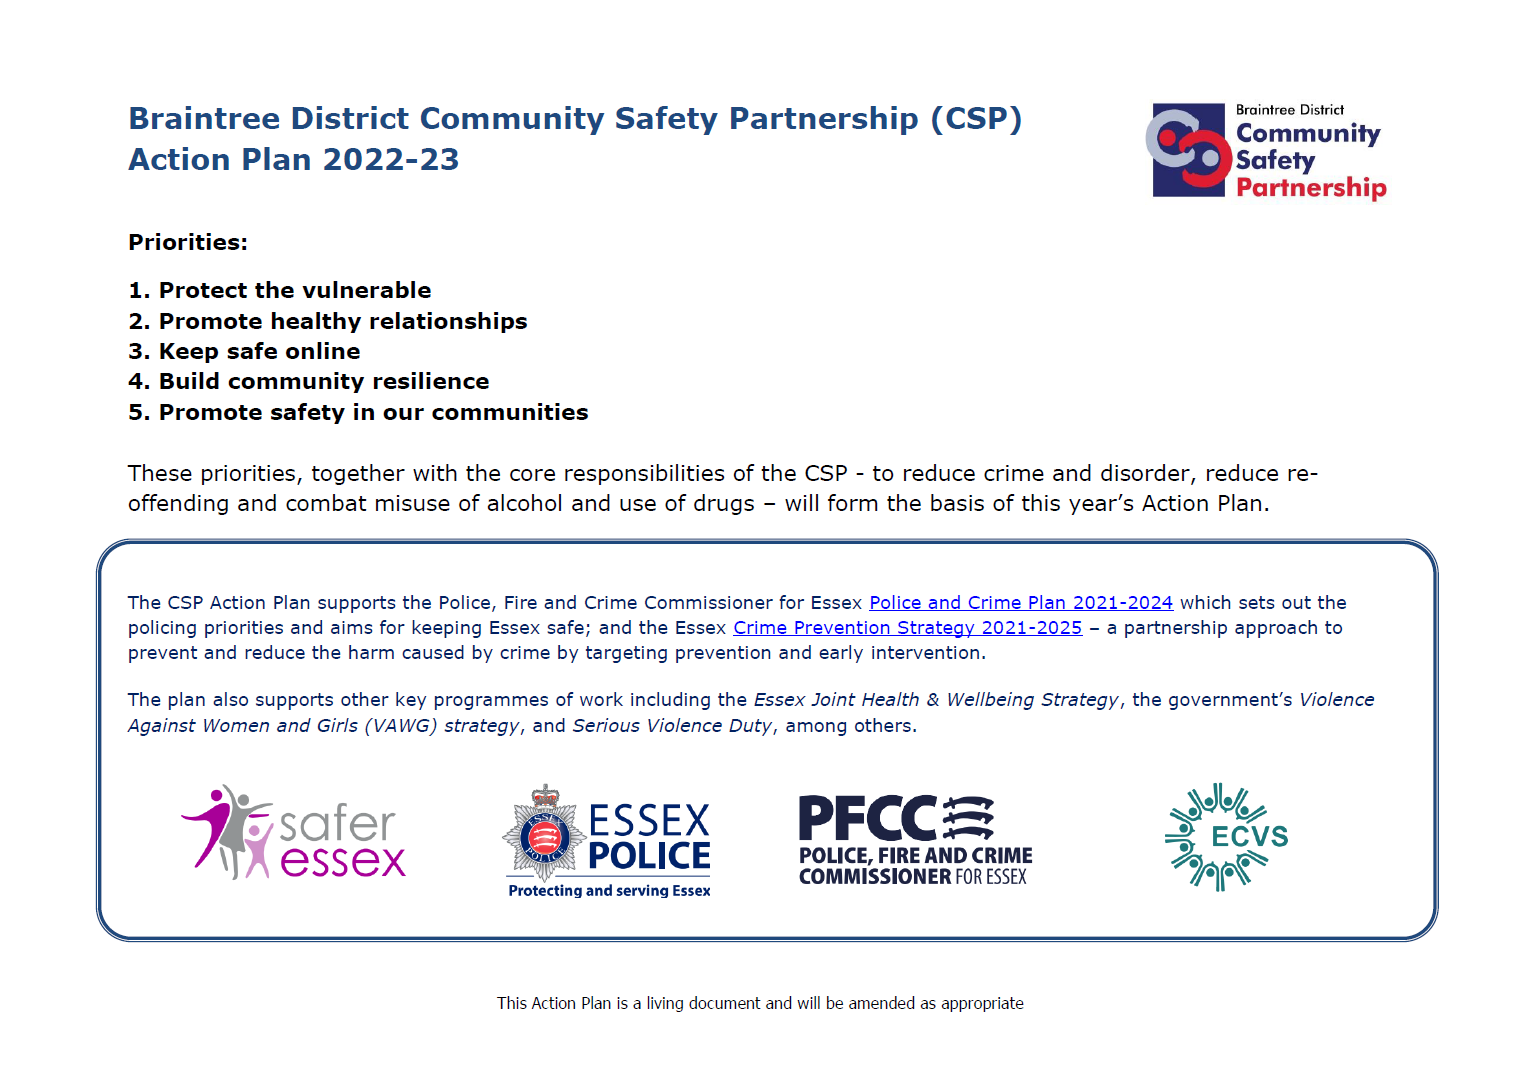 Community safety partnership